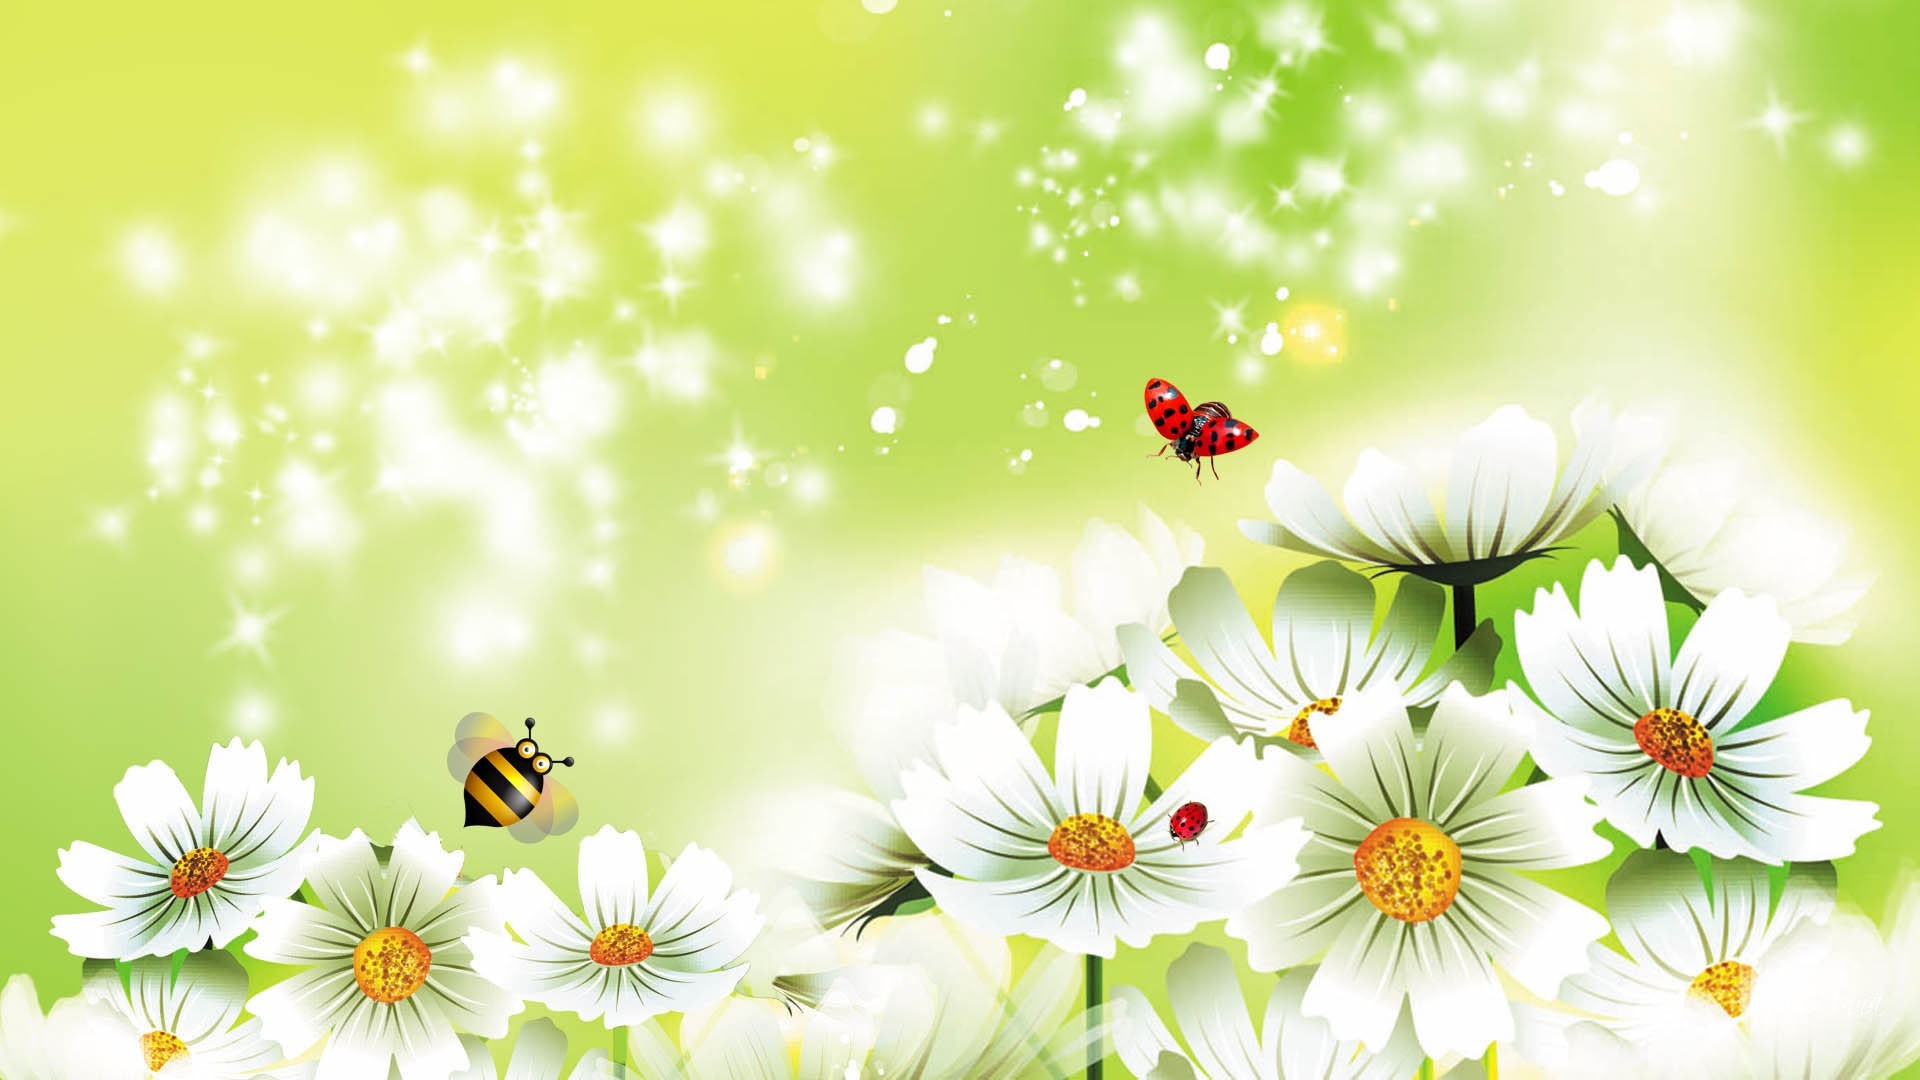 Flower: Daisies Green Fresh Flowers Ladybugs Sparkles Shine Lady Bug ...